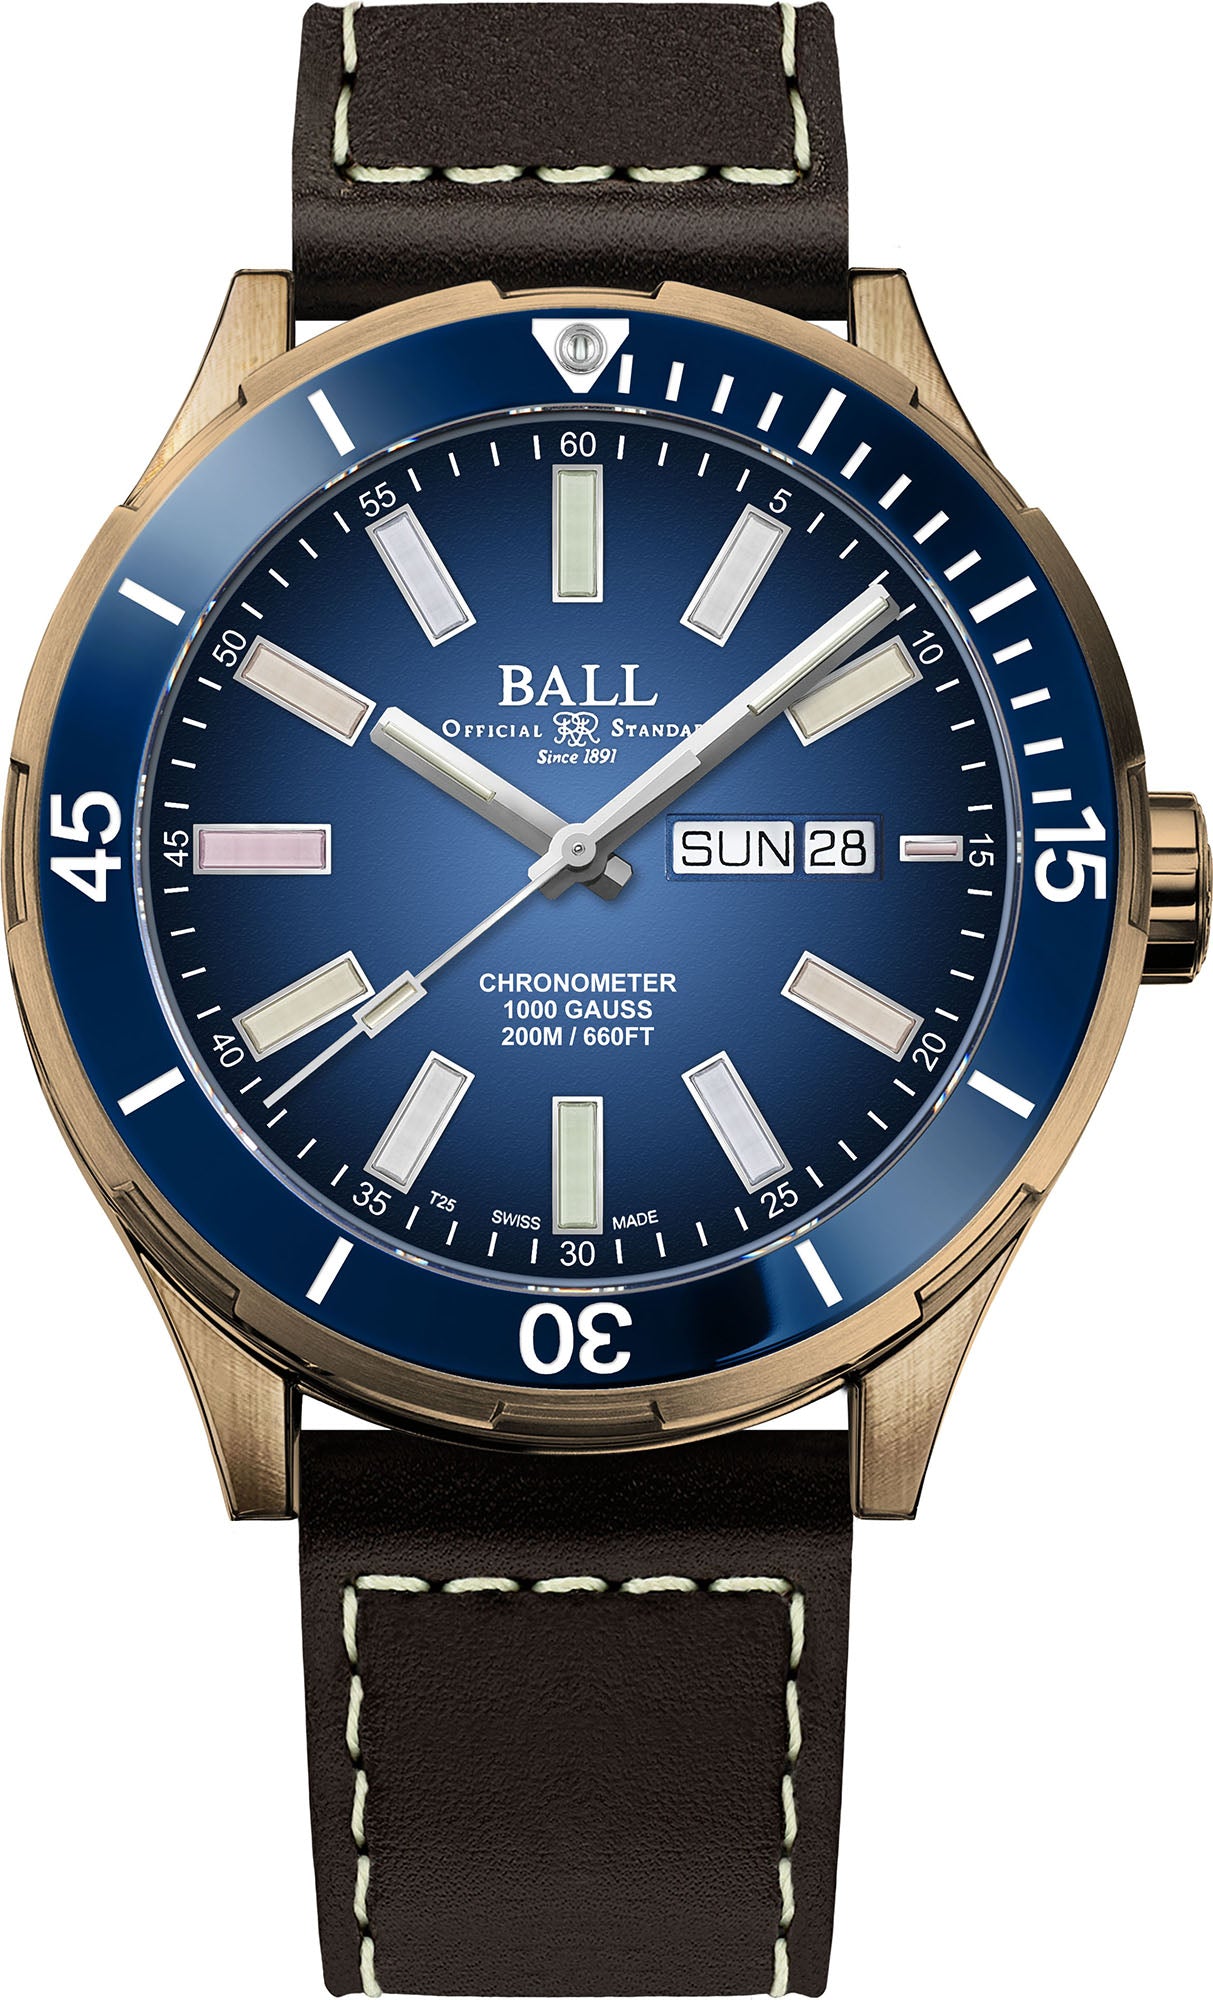 Photos - Wrist Watch Ball Watch Company Roadmaster Marvelight Bronze Limited Edition - Blue BL 